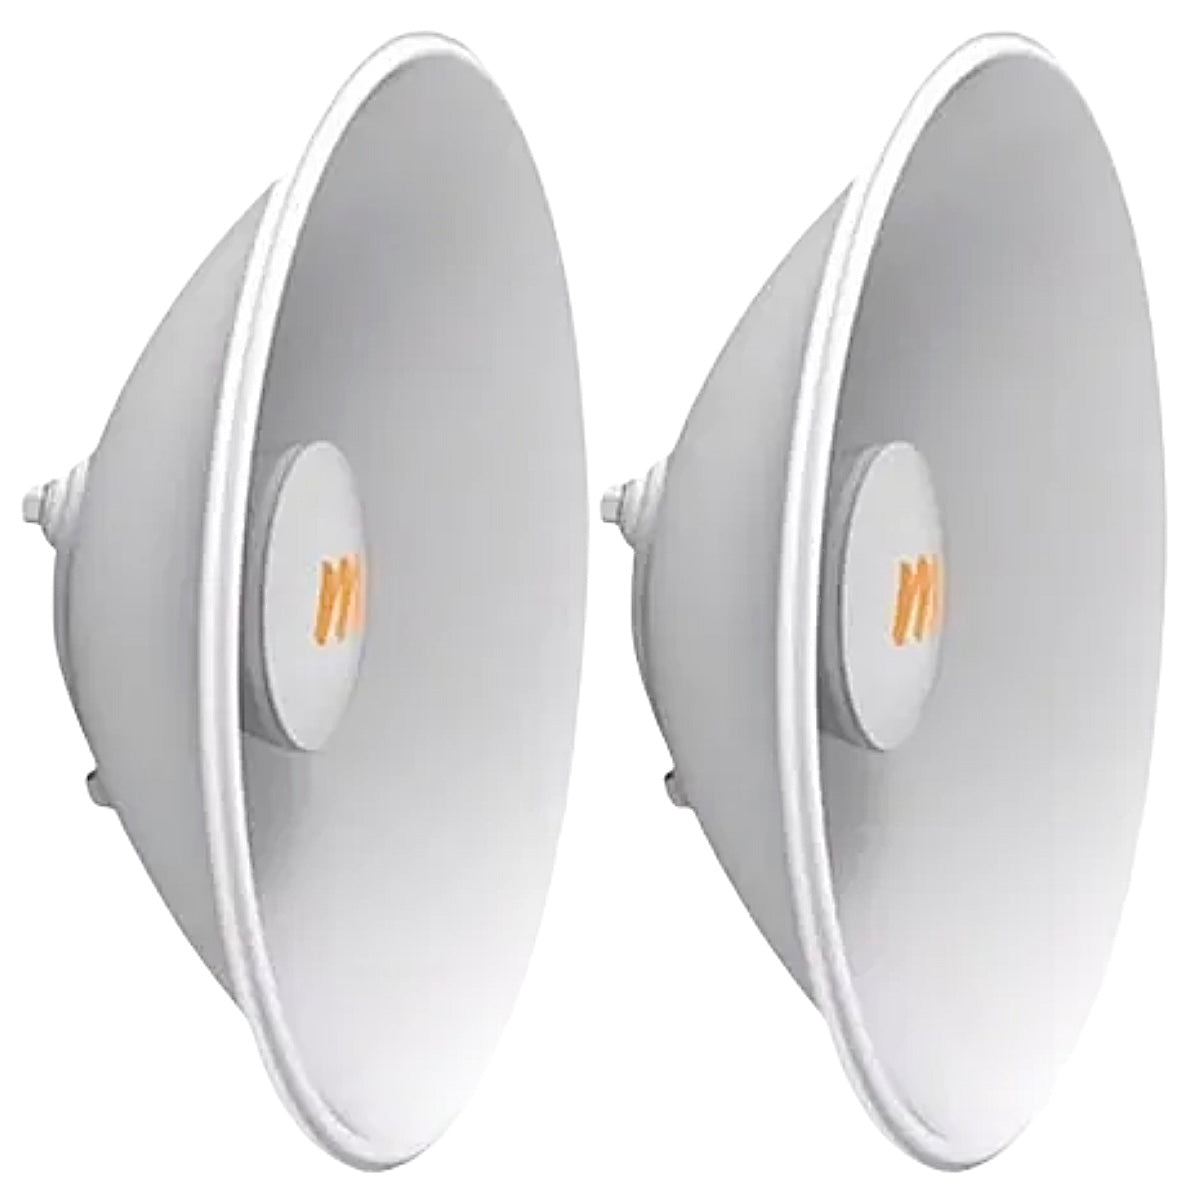 N5-X25 - 2 Pack Antennas (Dish)